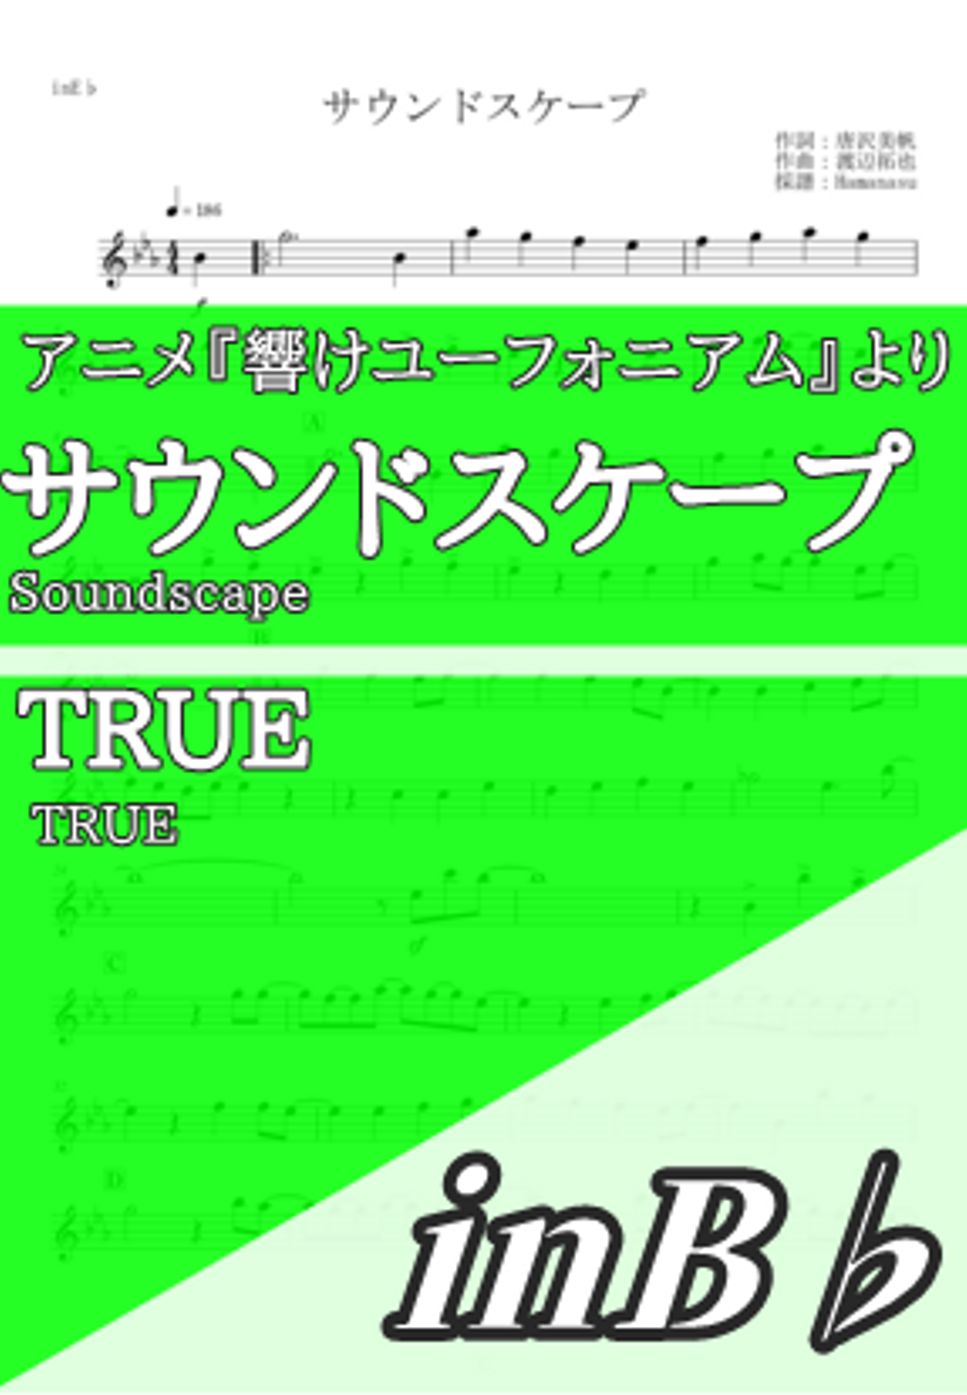 TRUE - Soundscape (inB♭) by Hamanasu